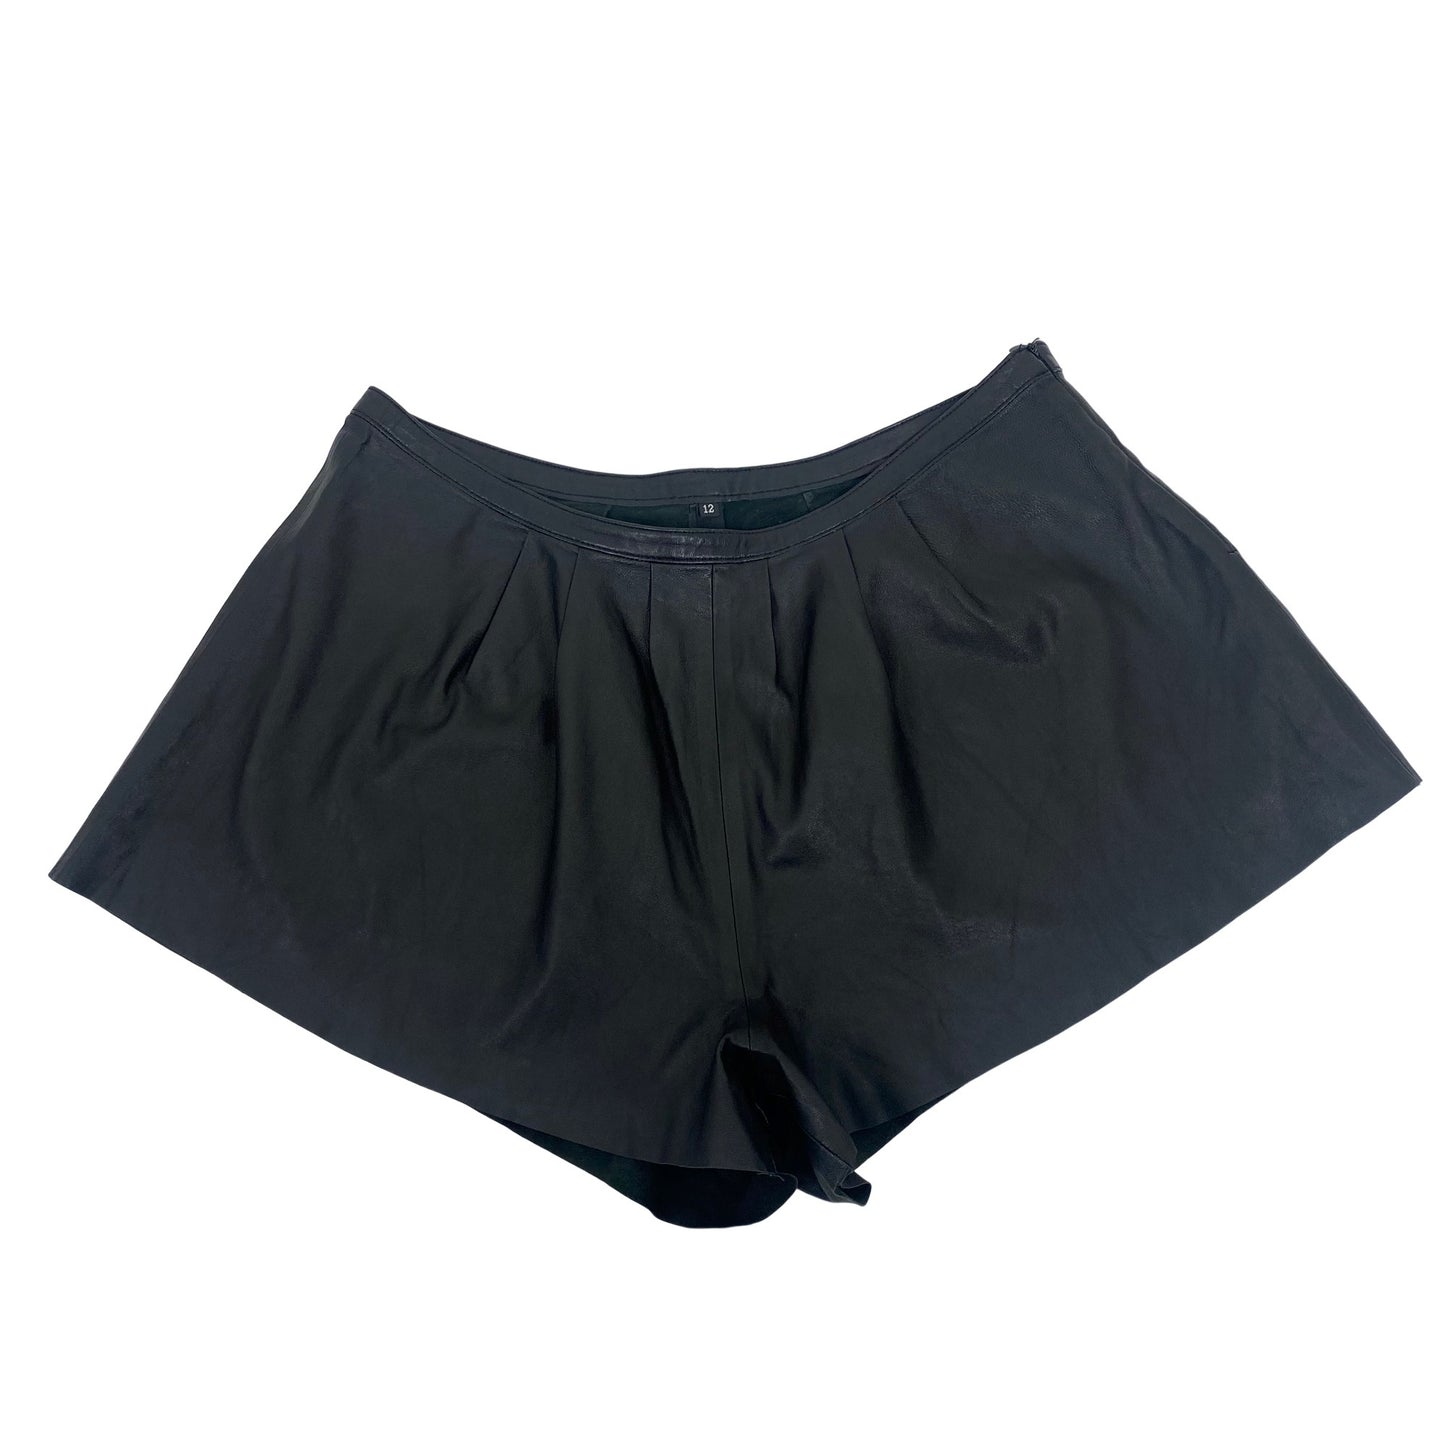 Superette leather shorts | size 12